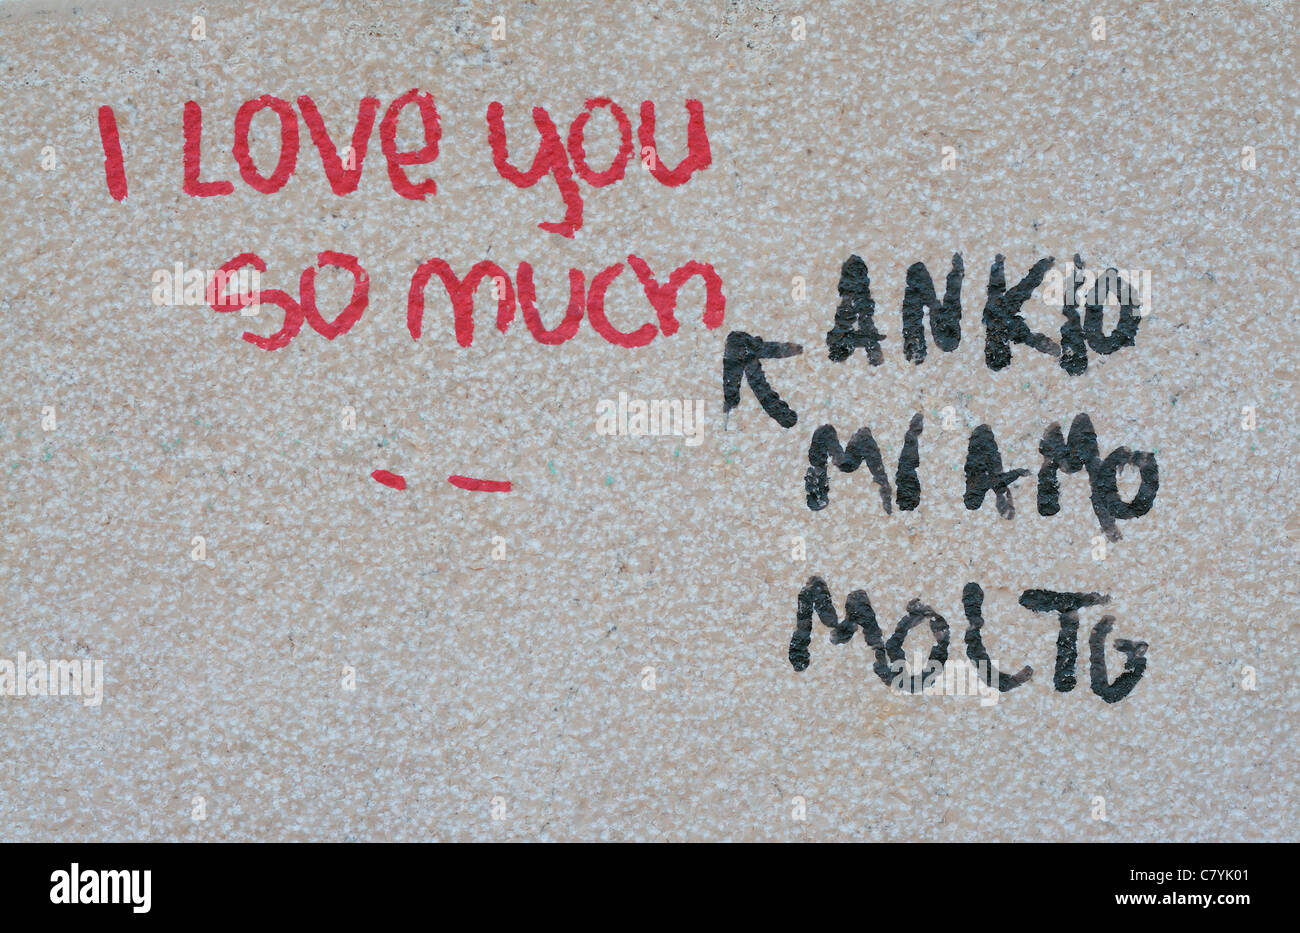 I love you so much Anchio ankio mi amo molto writing on the wall Stock Photo